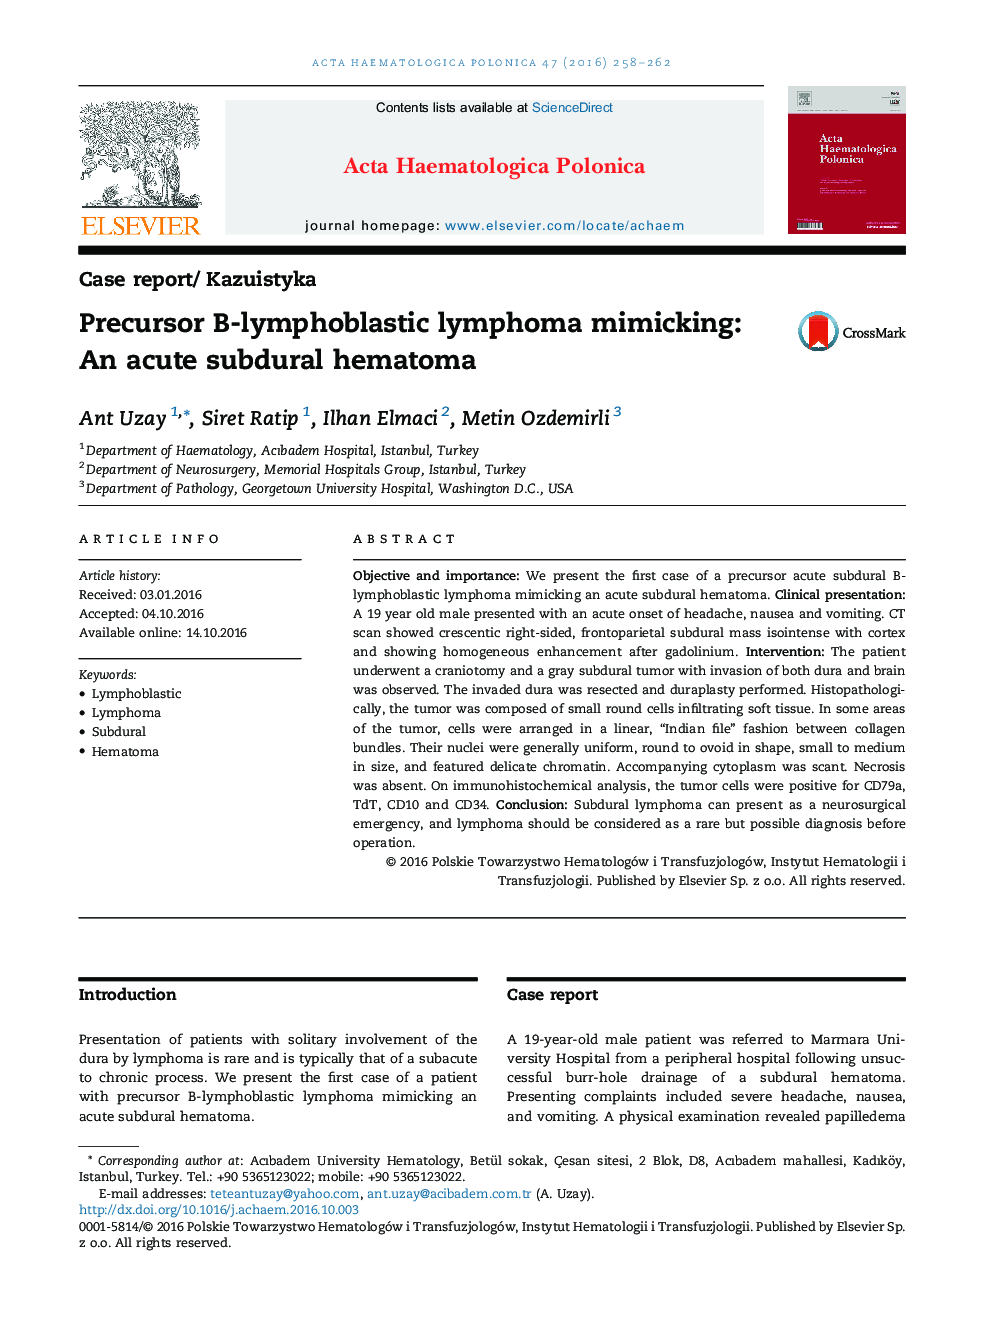 Precursor B-lymphoblastic lymphoma mimicking: An acute subdural hematoma